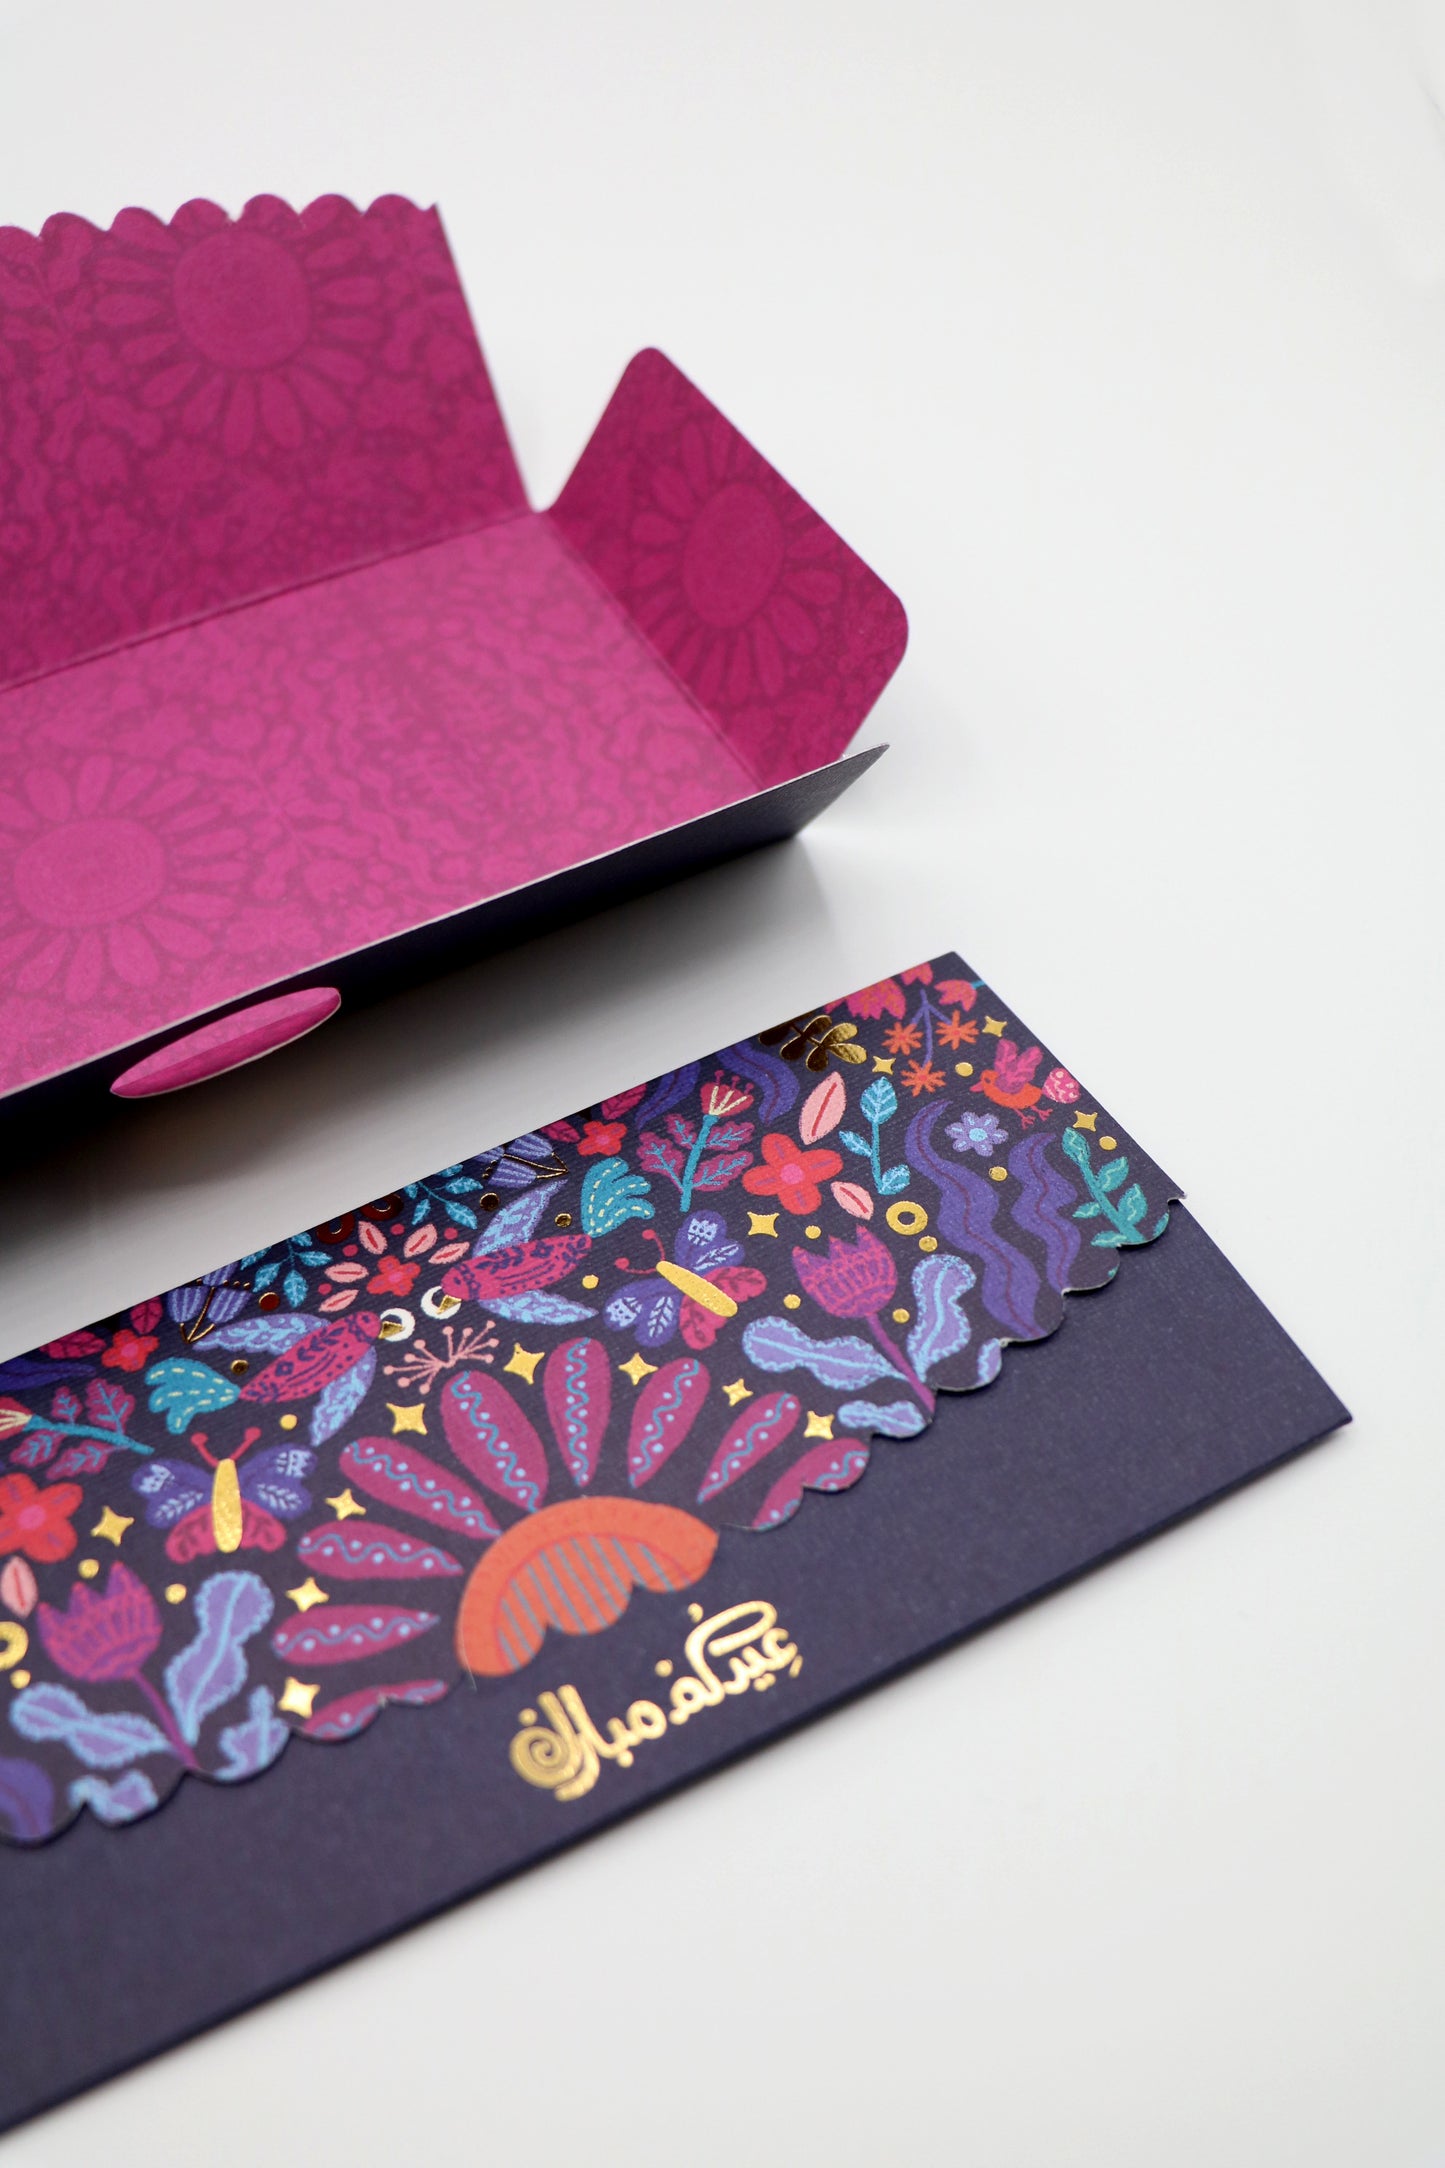 Eid Envelopes - Sunset أظرف العيد - تصميم الغروب